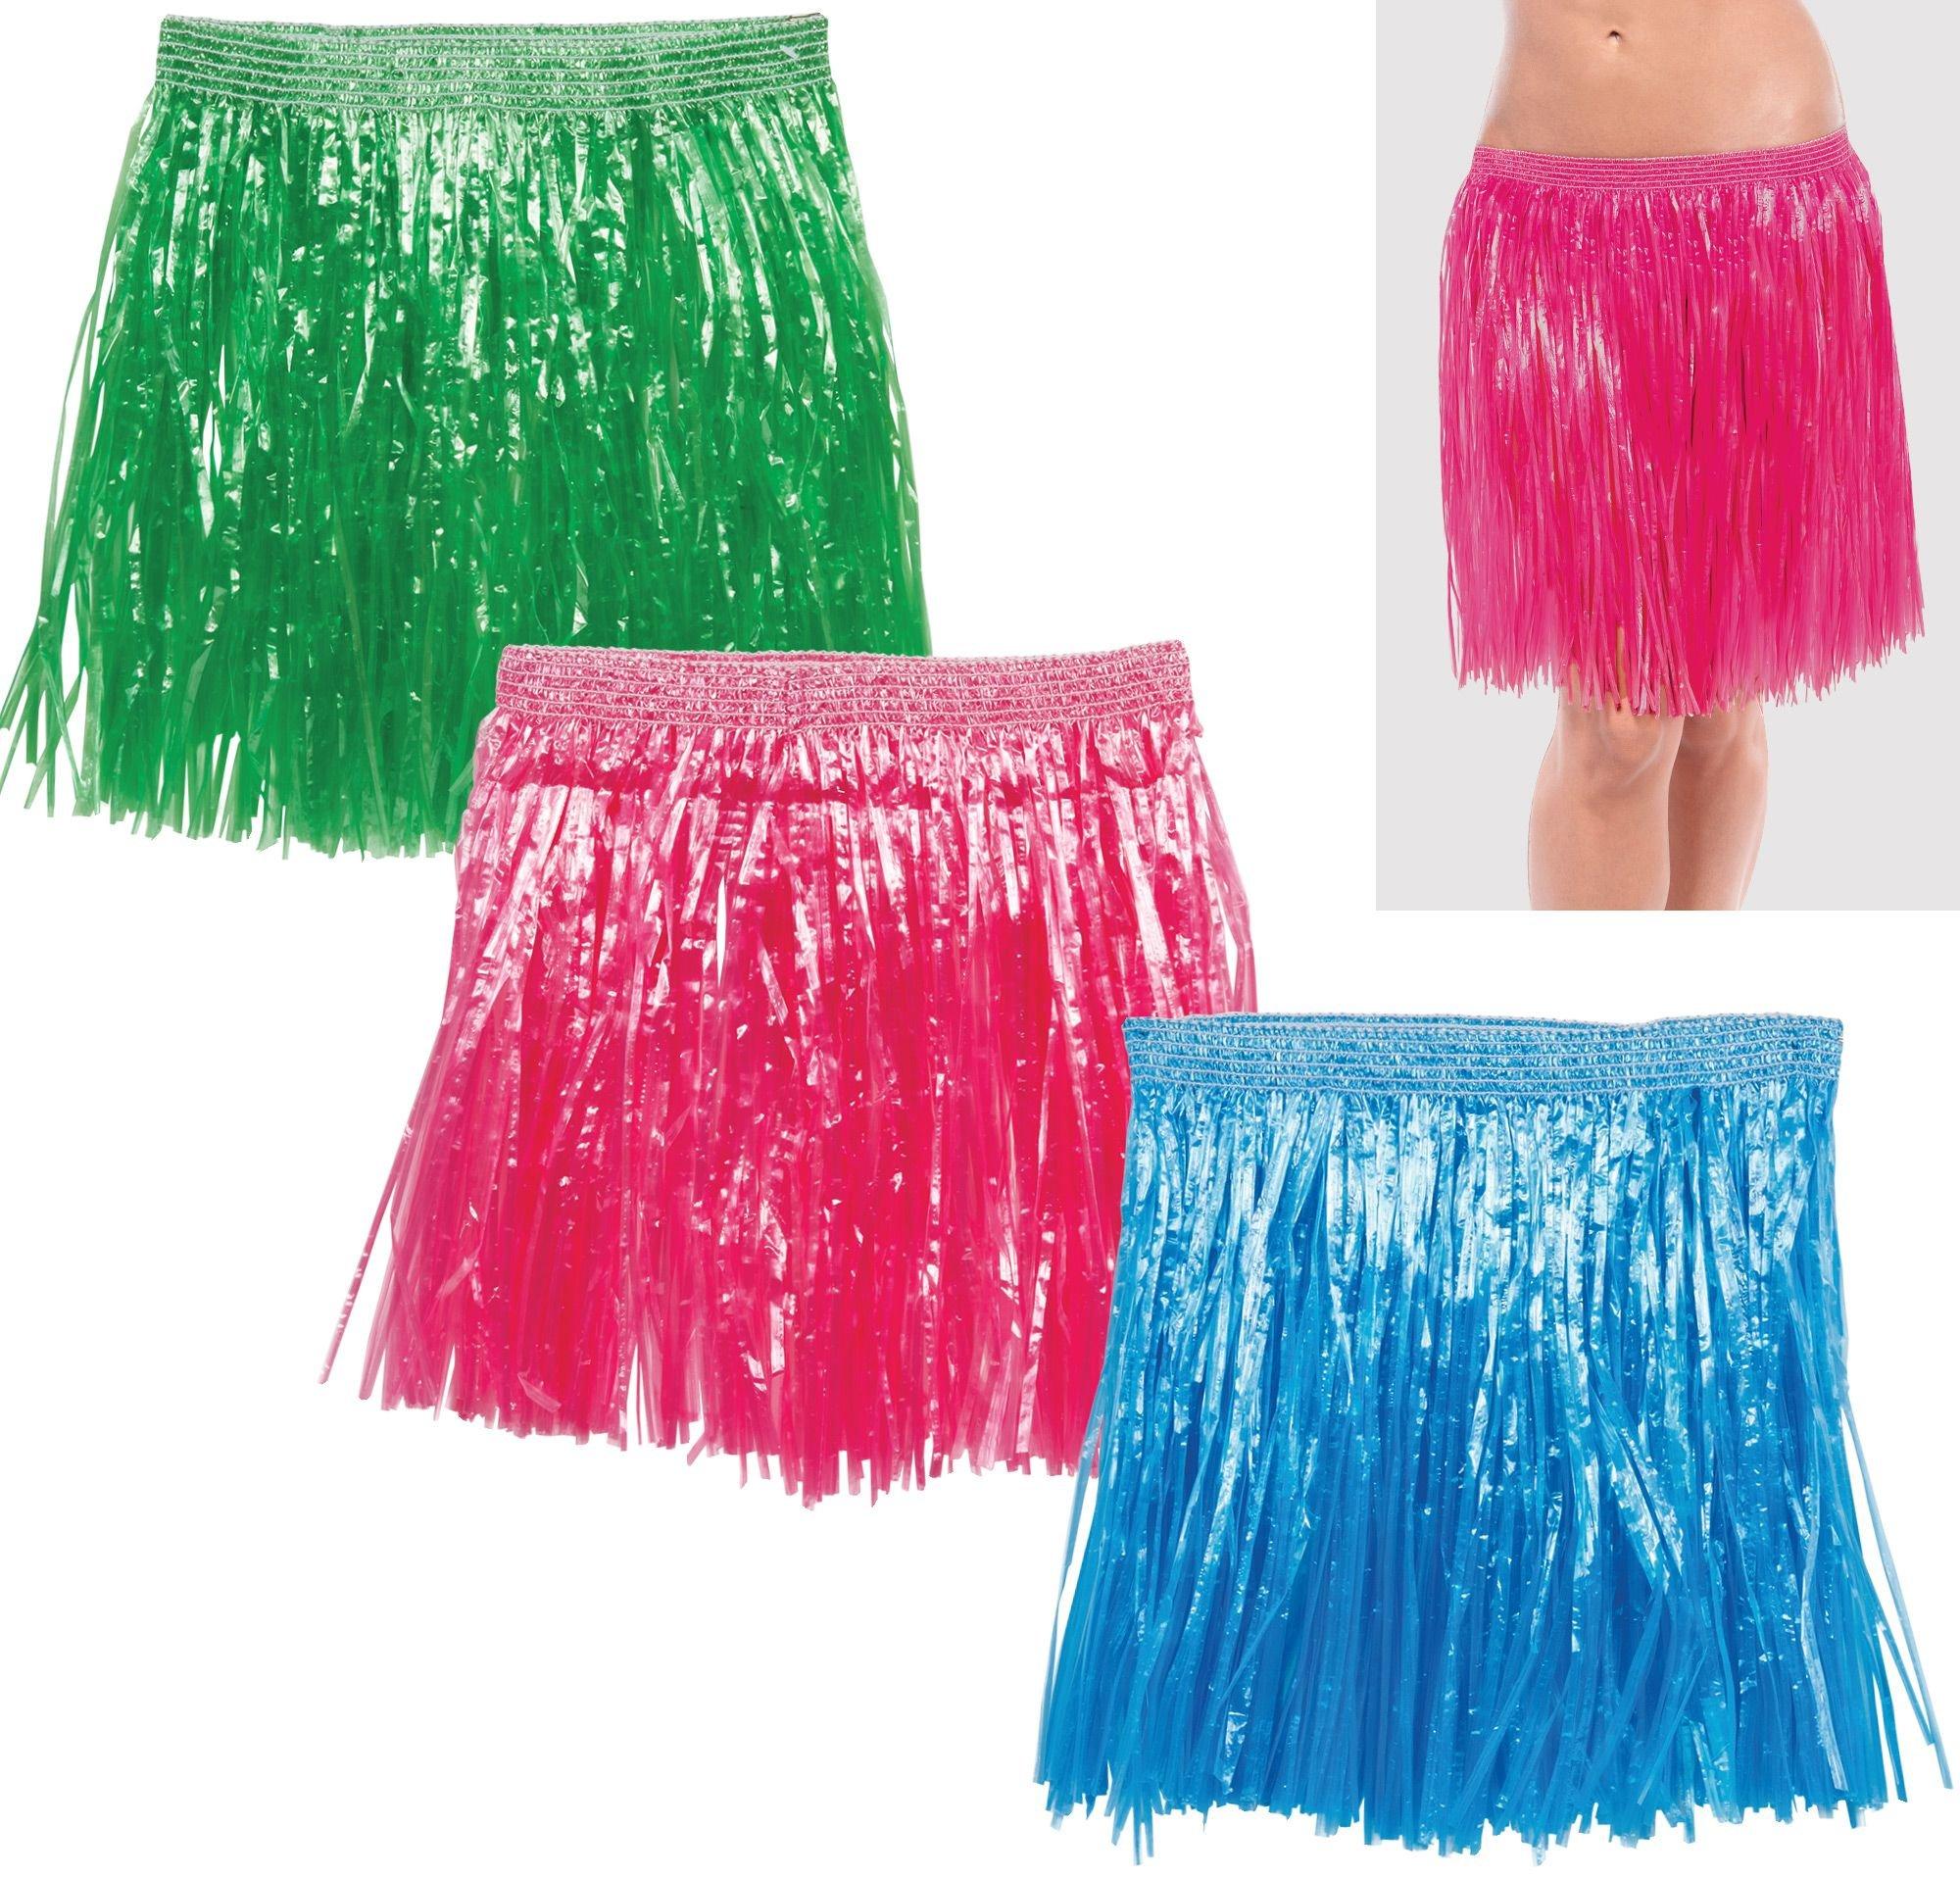 Adult XL Green Grass Skirt - Party Makers